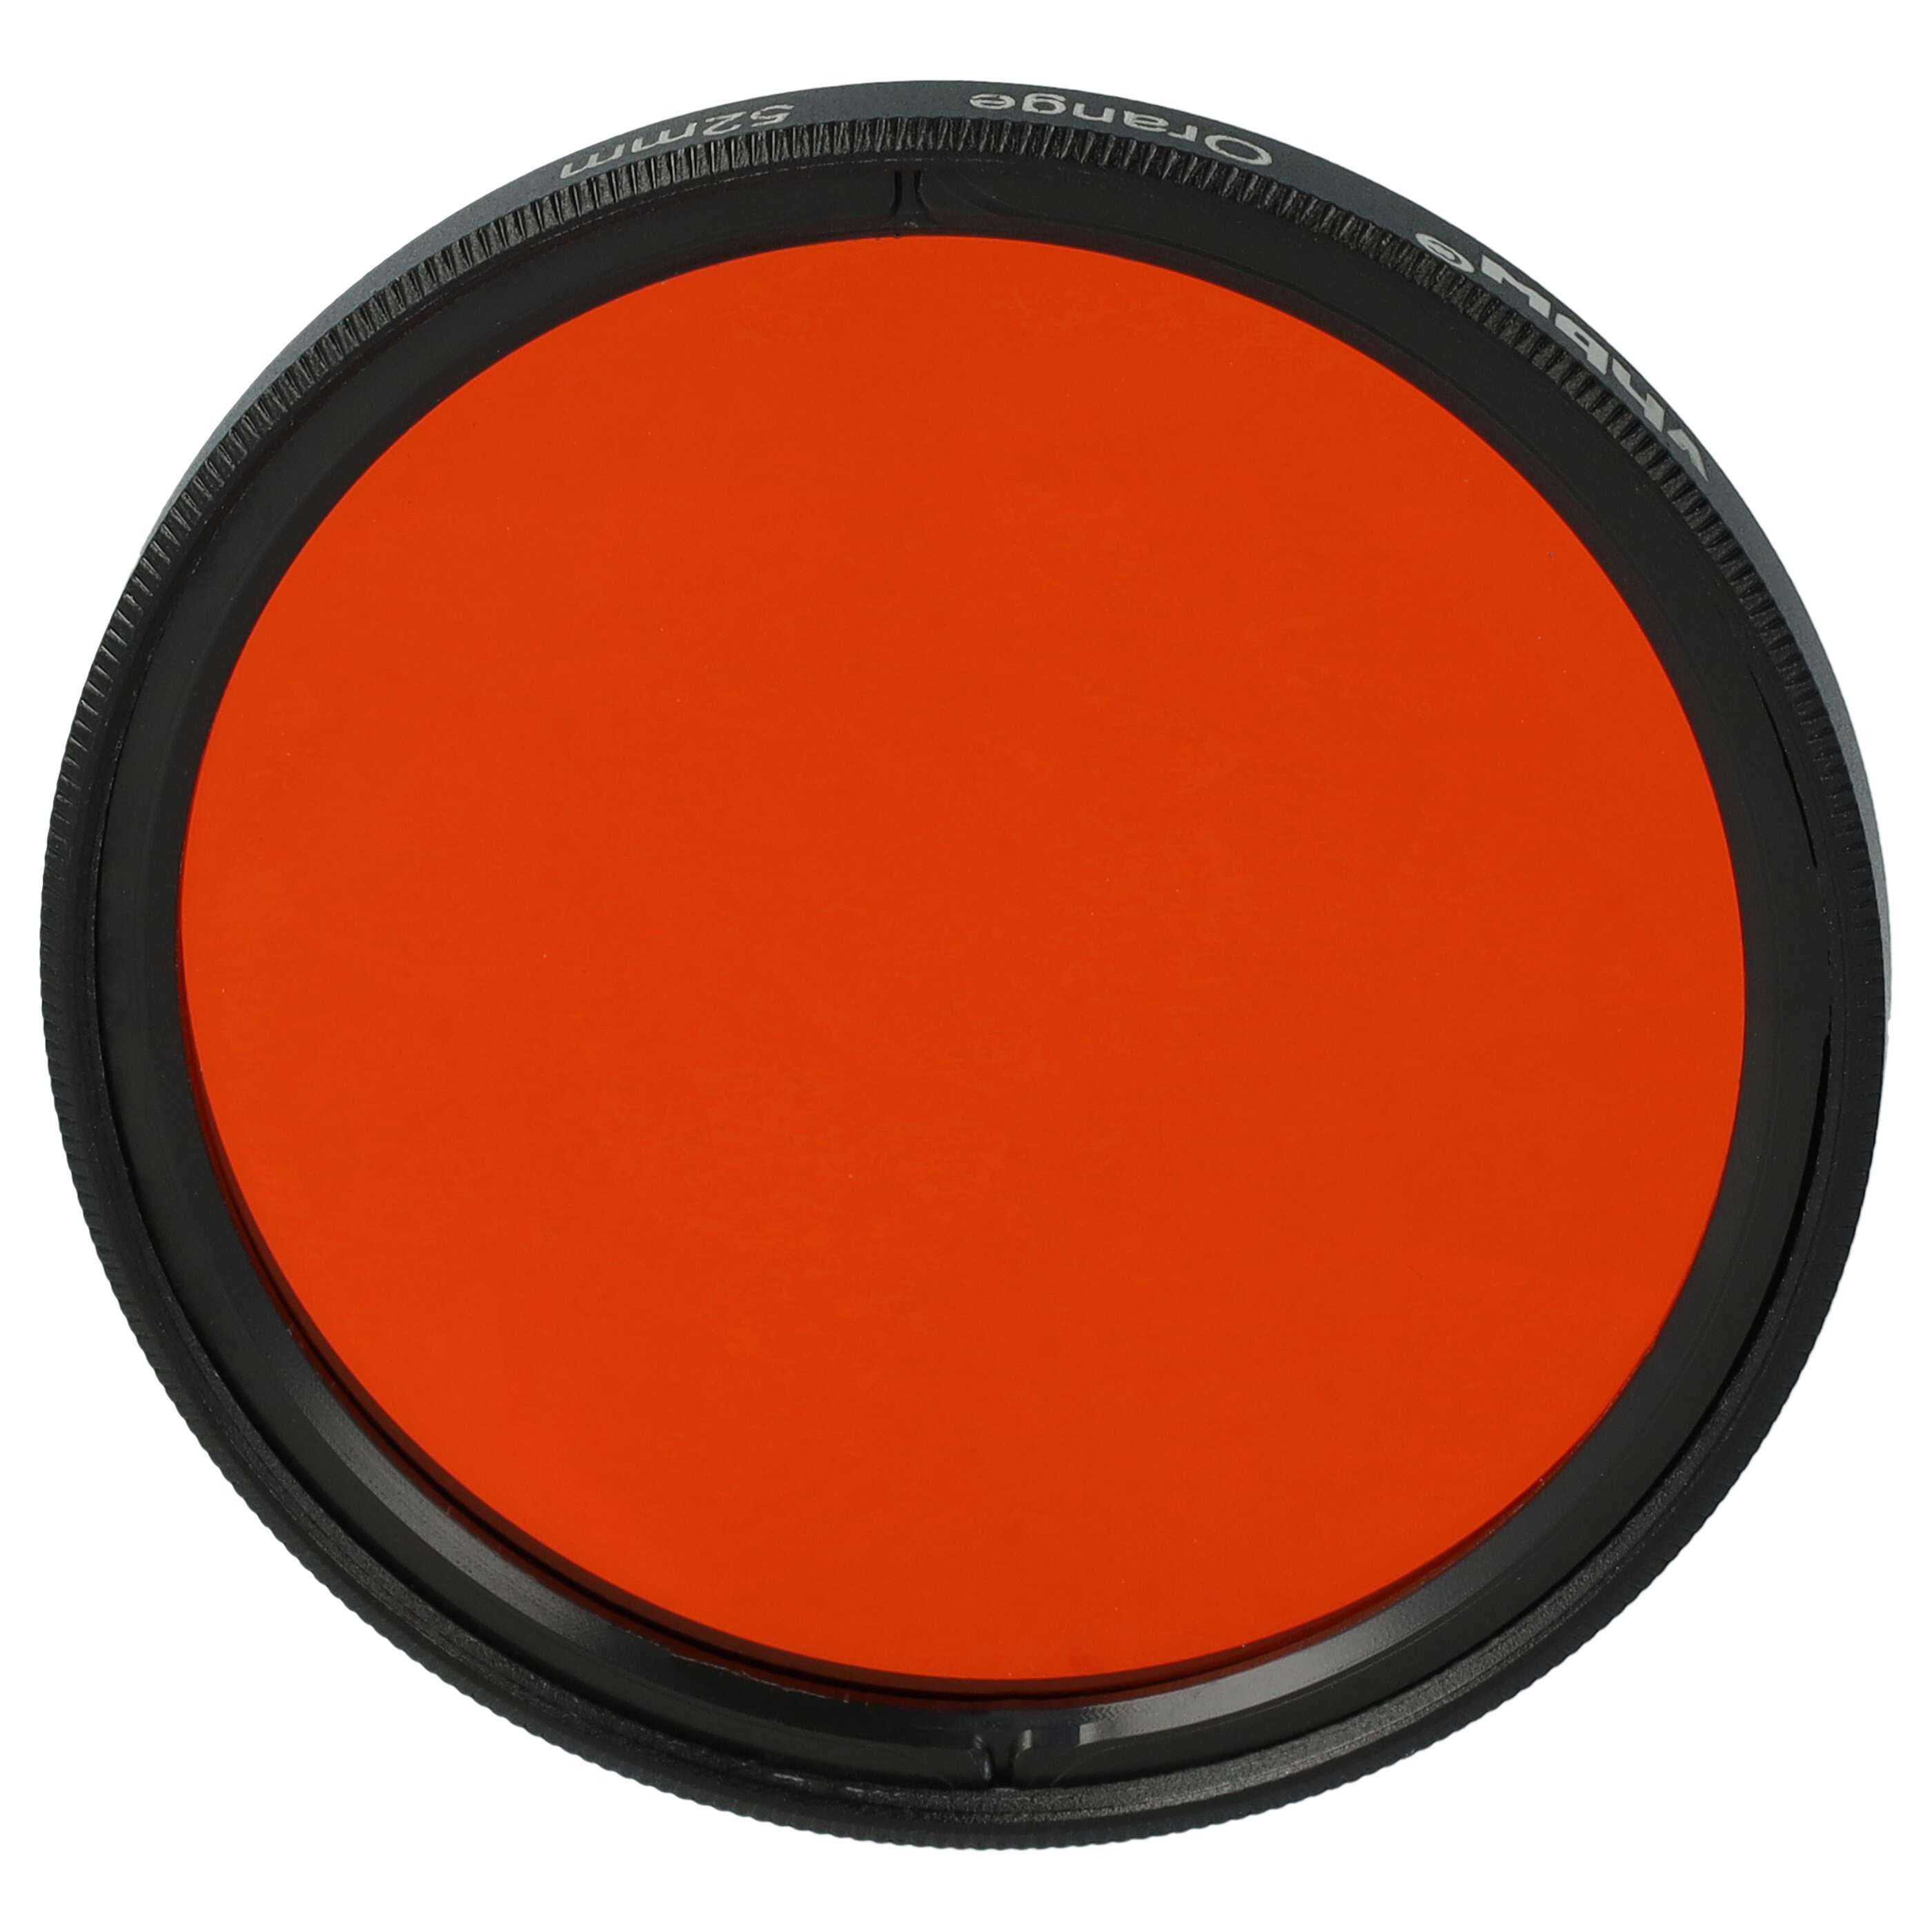 Coloured Filter, Orange suitable for Camera Lenses with 52 mm Filter Thread - Orange Filter